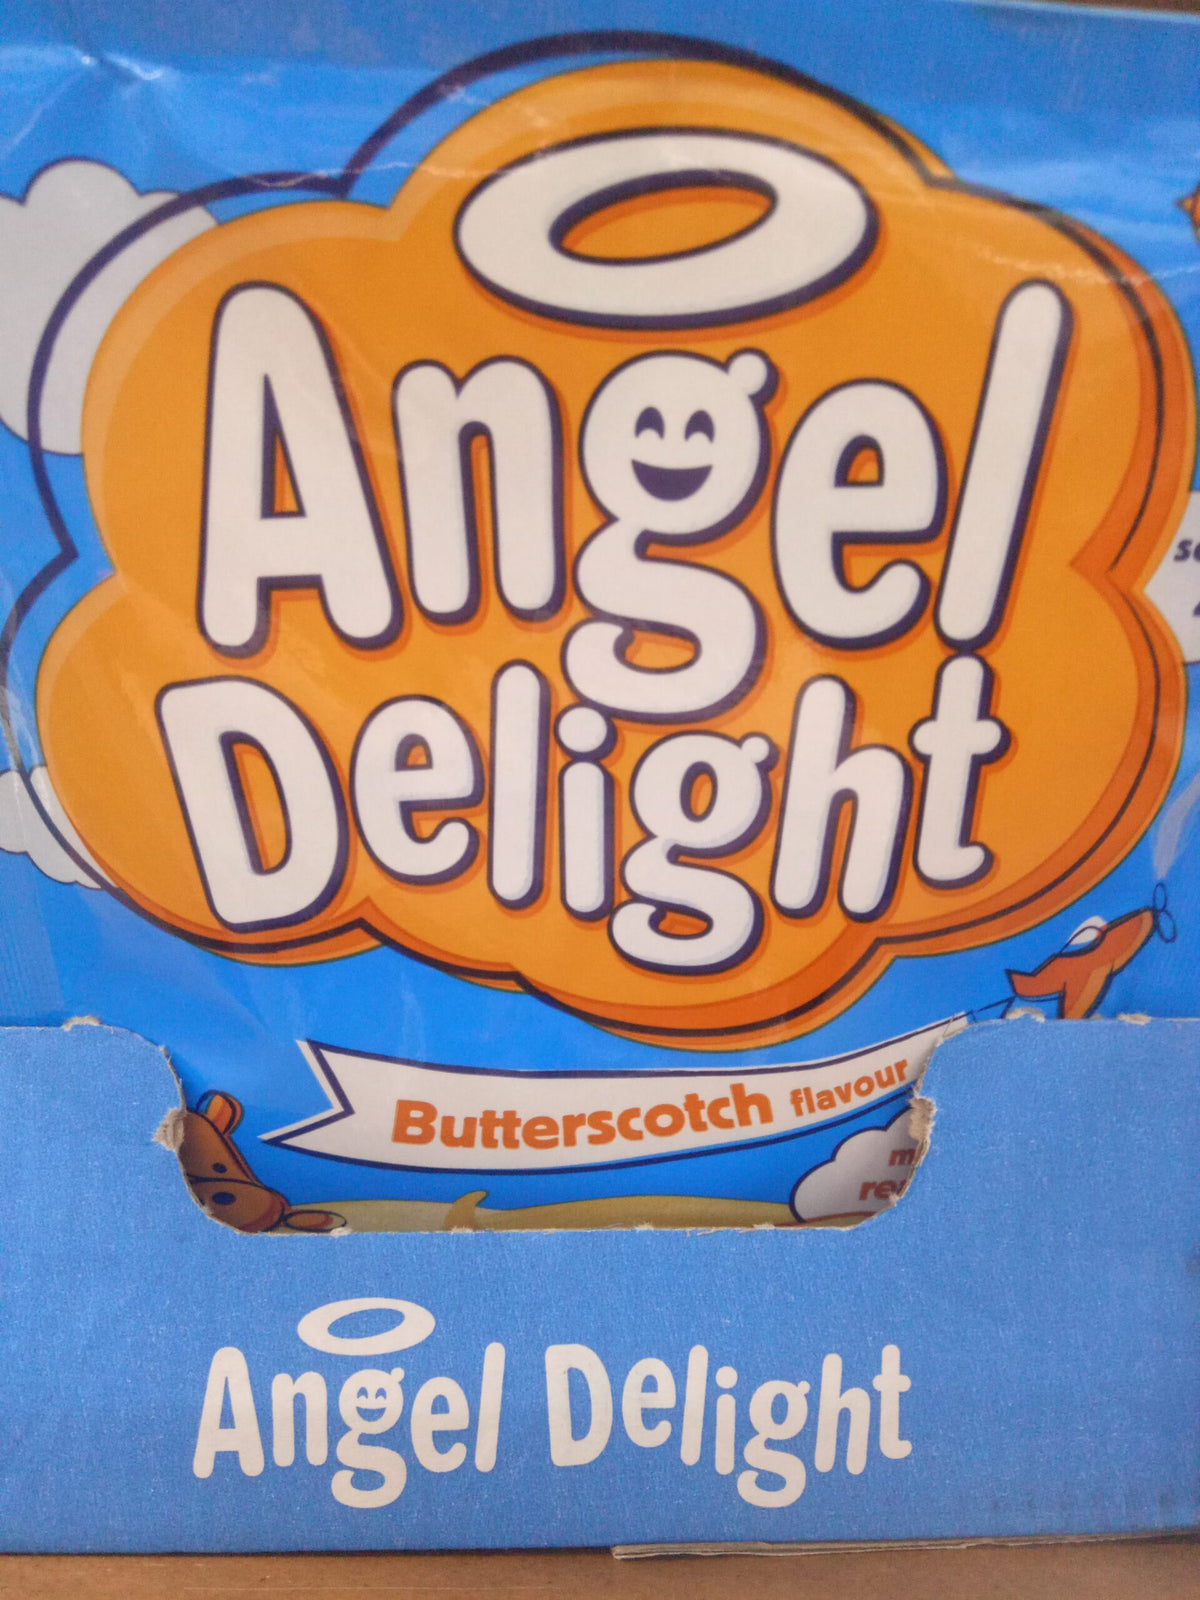 Angel delight